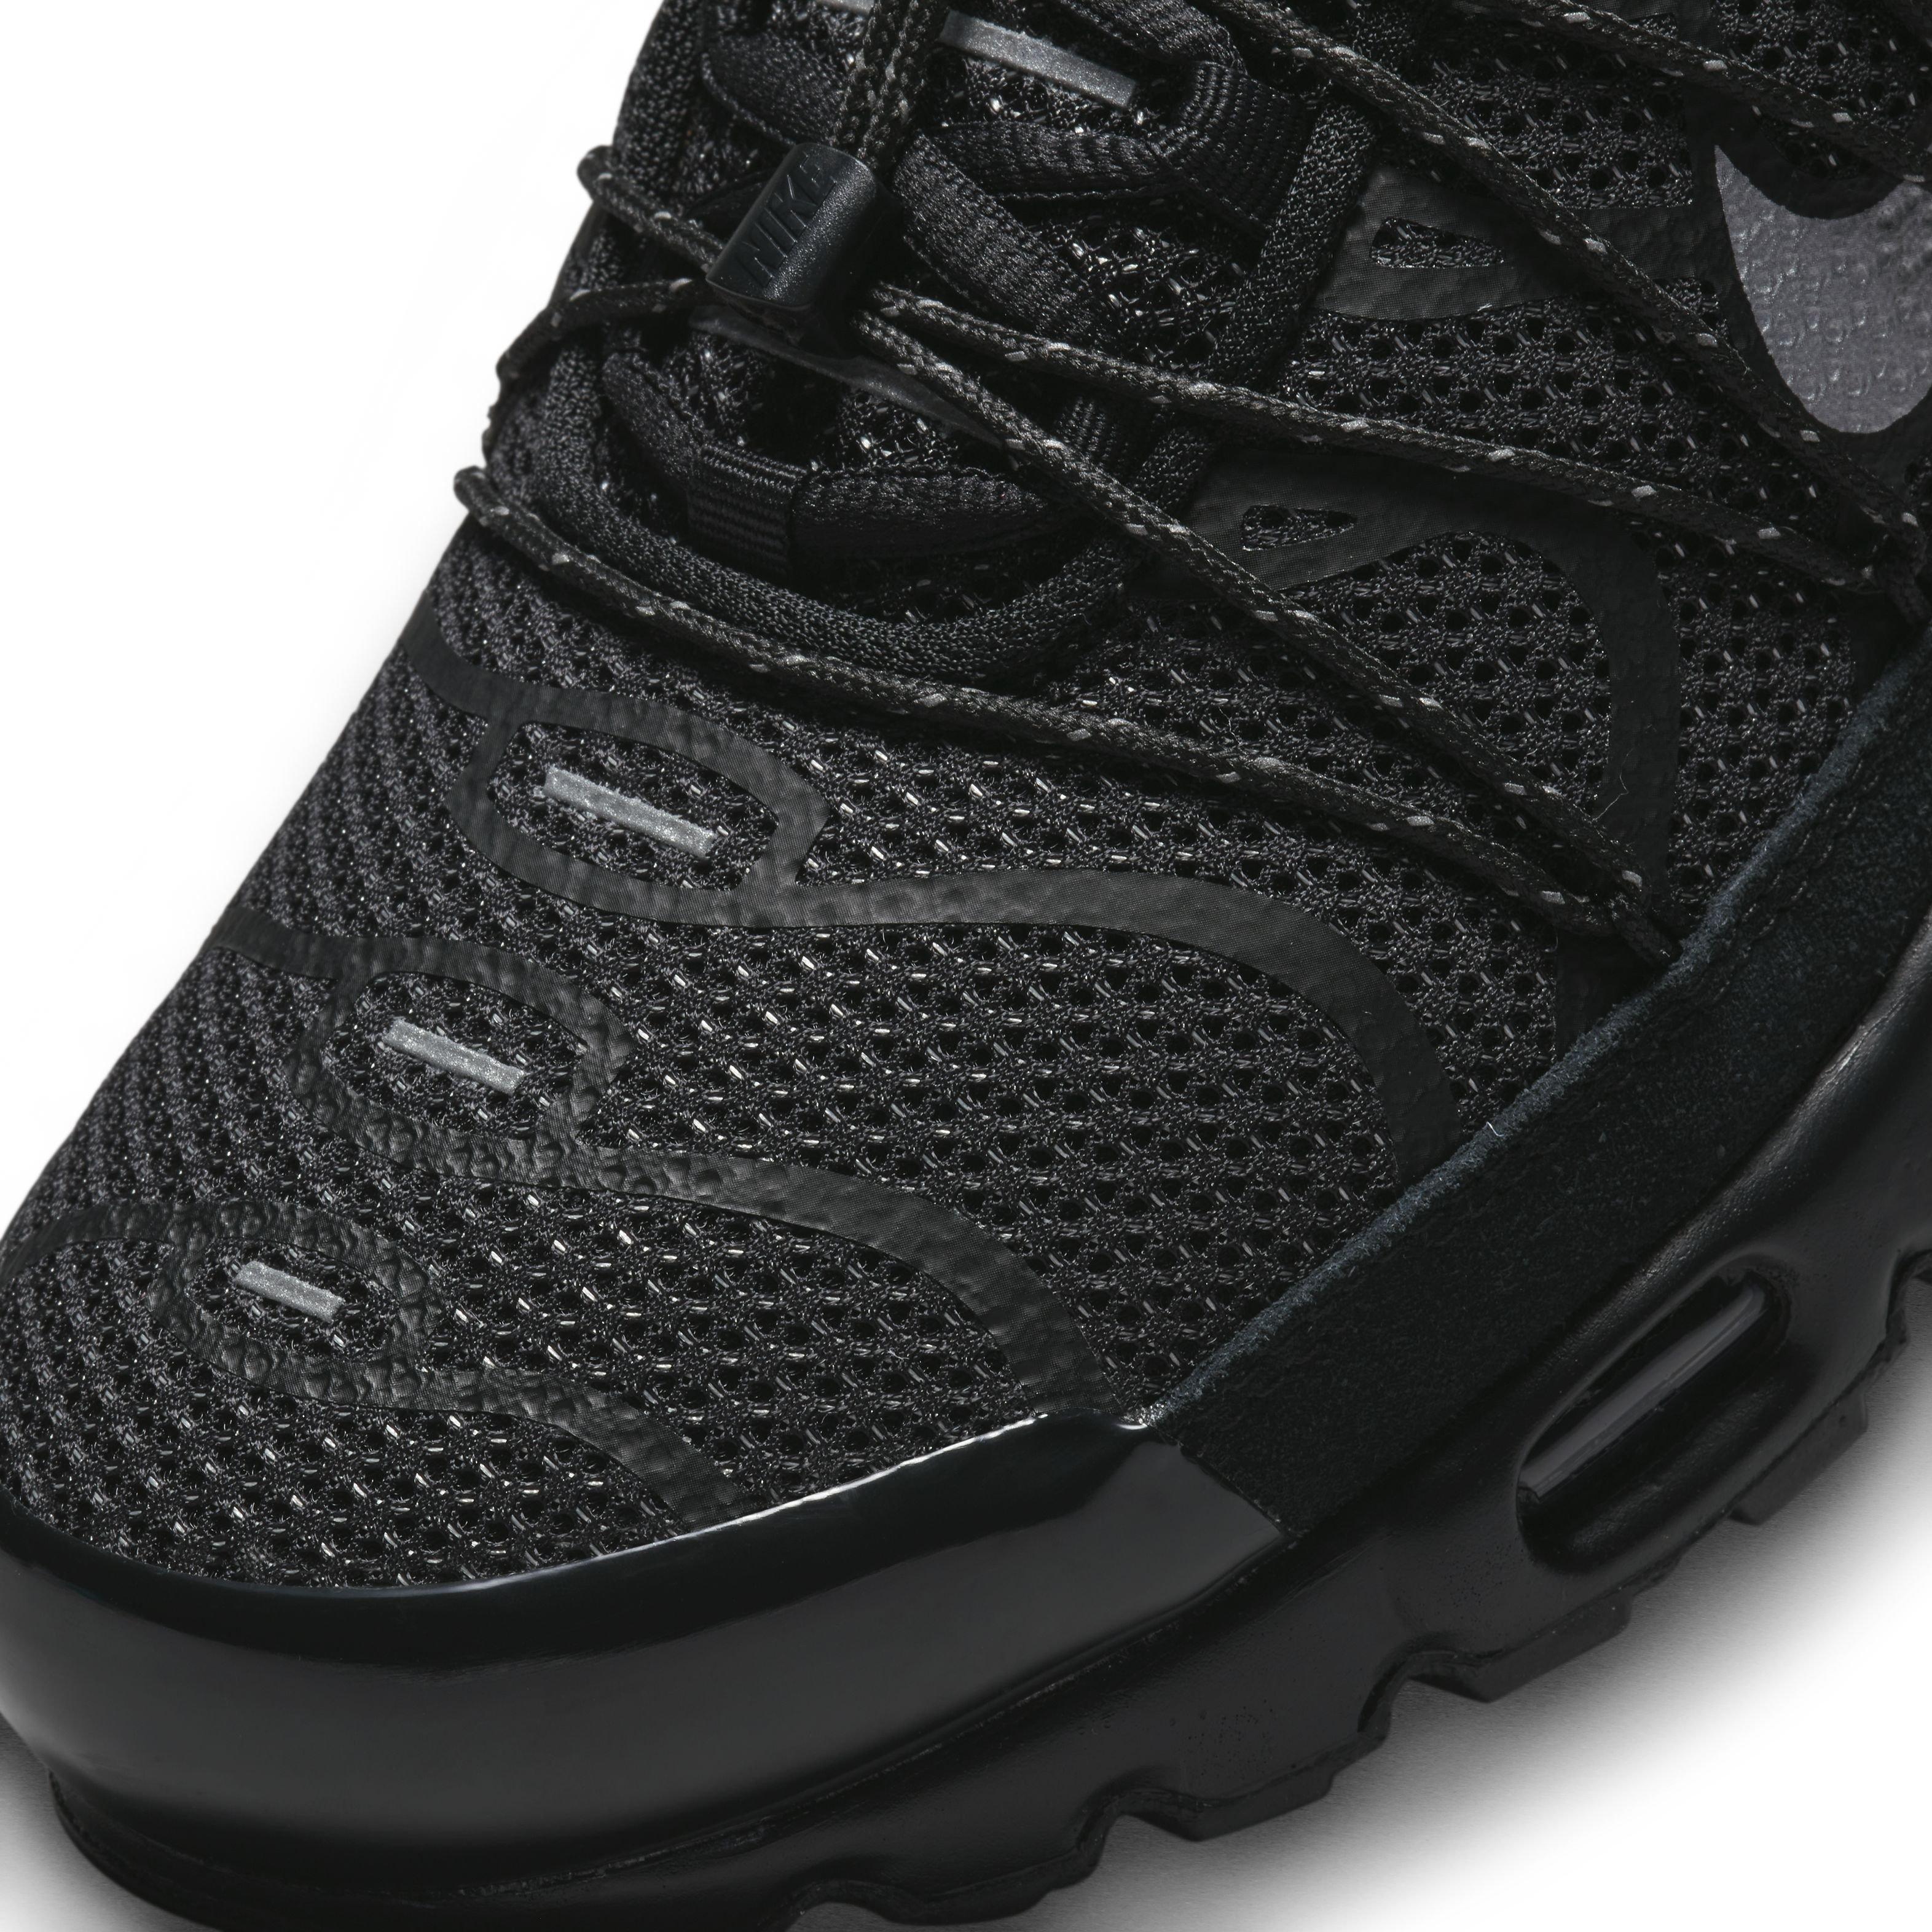 On-Foot Look // Nike Air Max 1 Jacquard Black/White